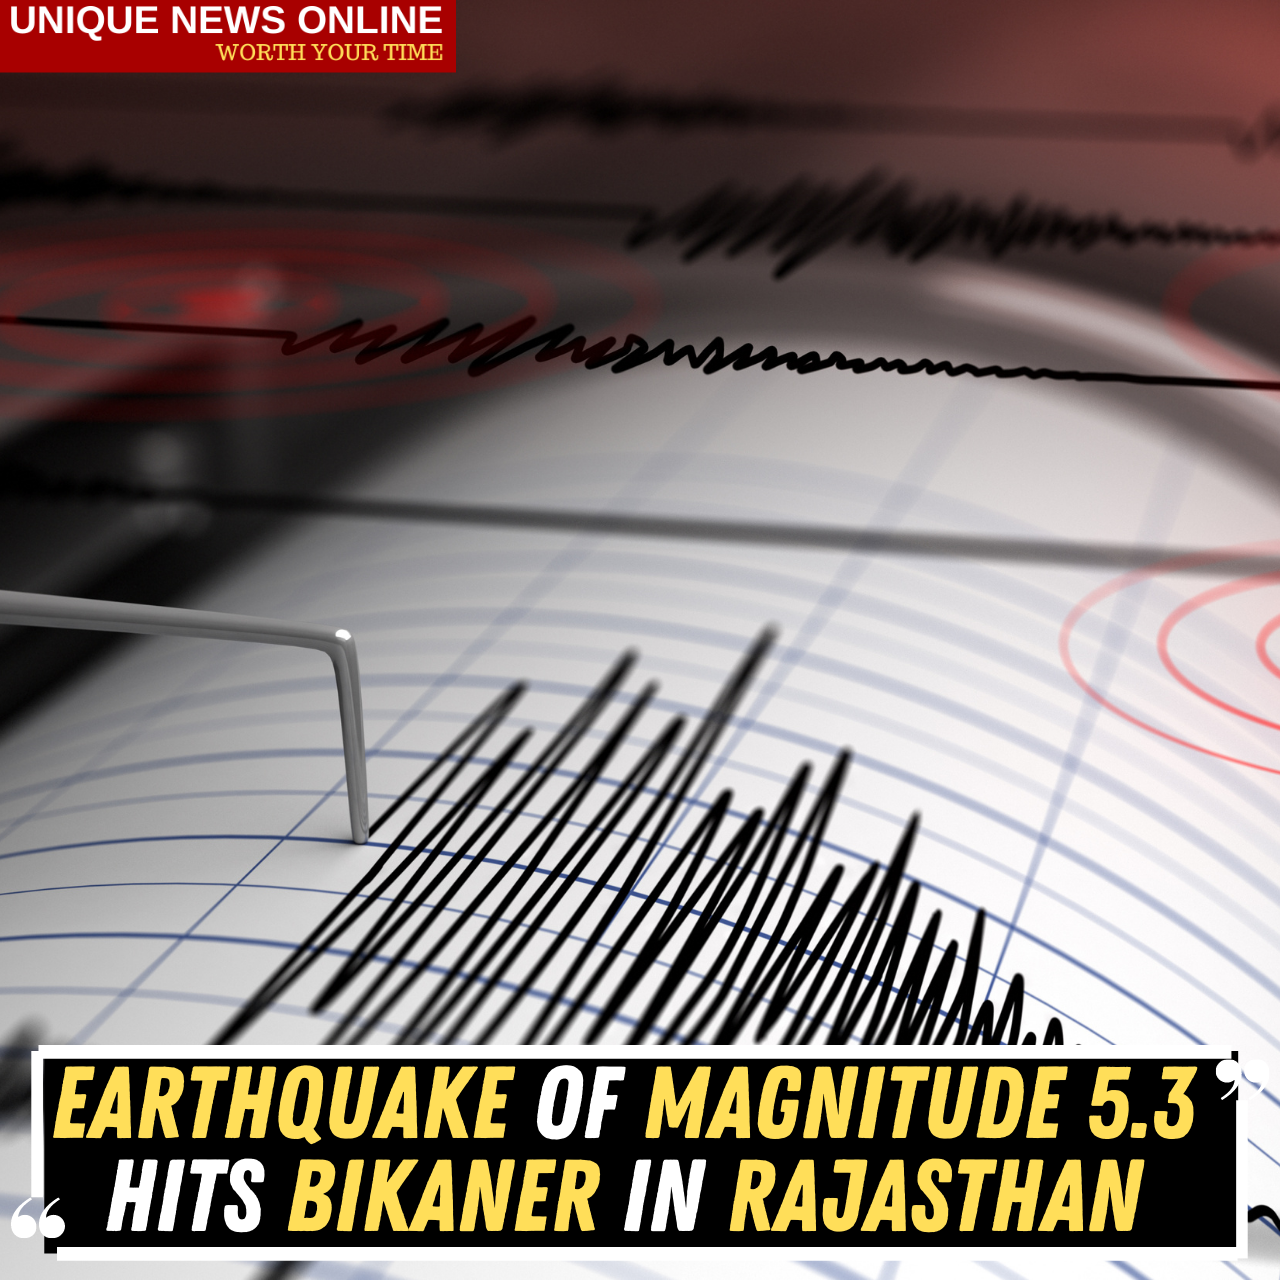 5.3 magnitude earthquake tremors felt in Bikaner of Rajasthan